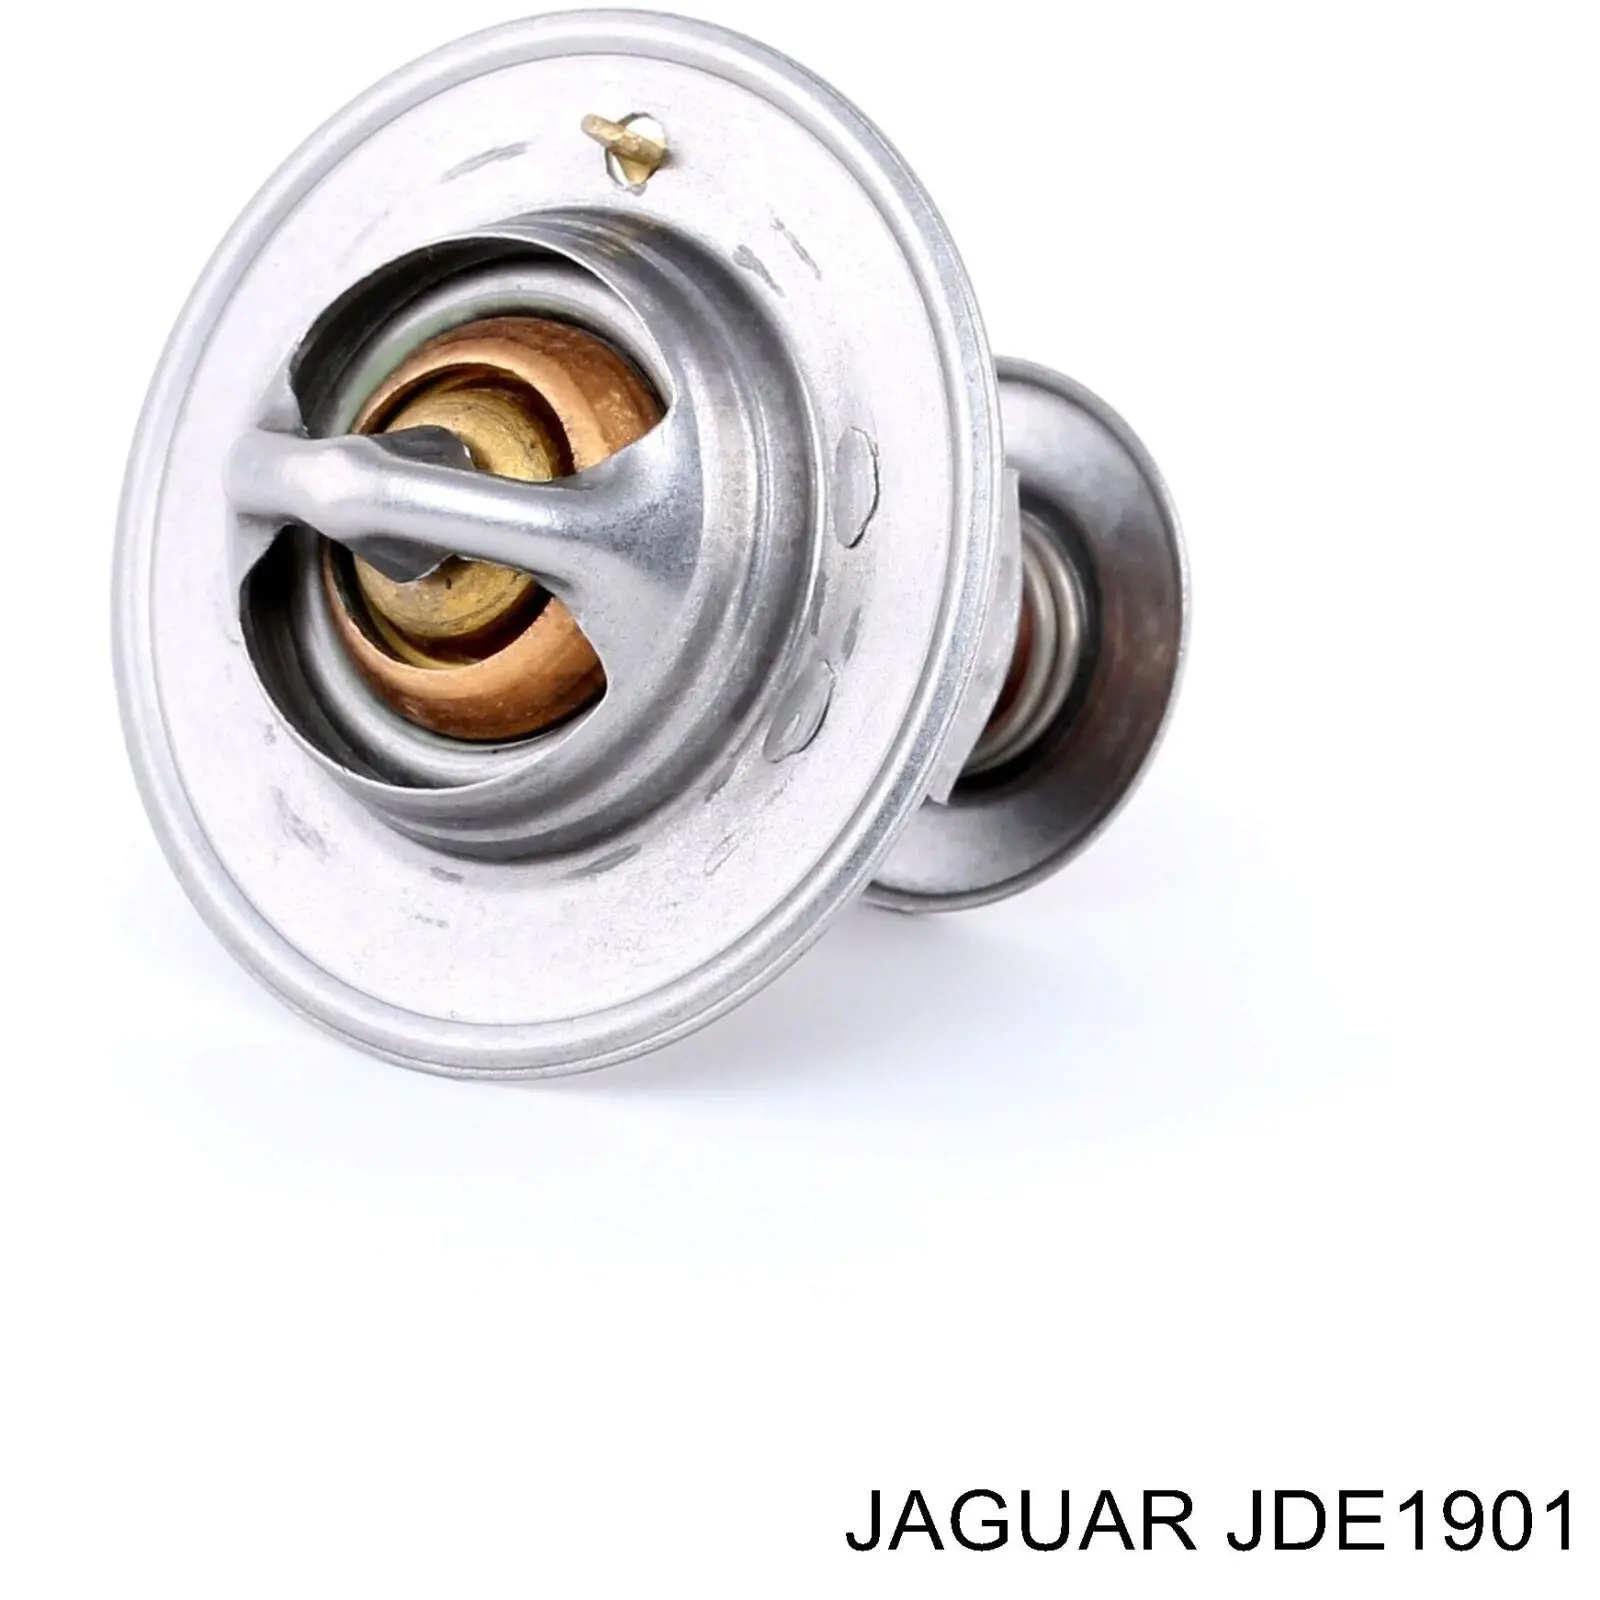 JDE1901 Jaguar termostato